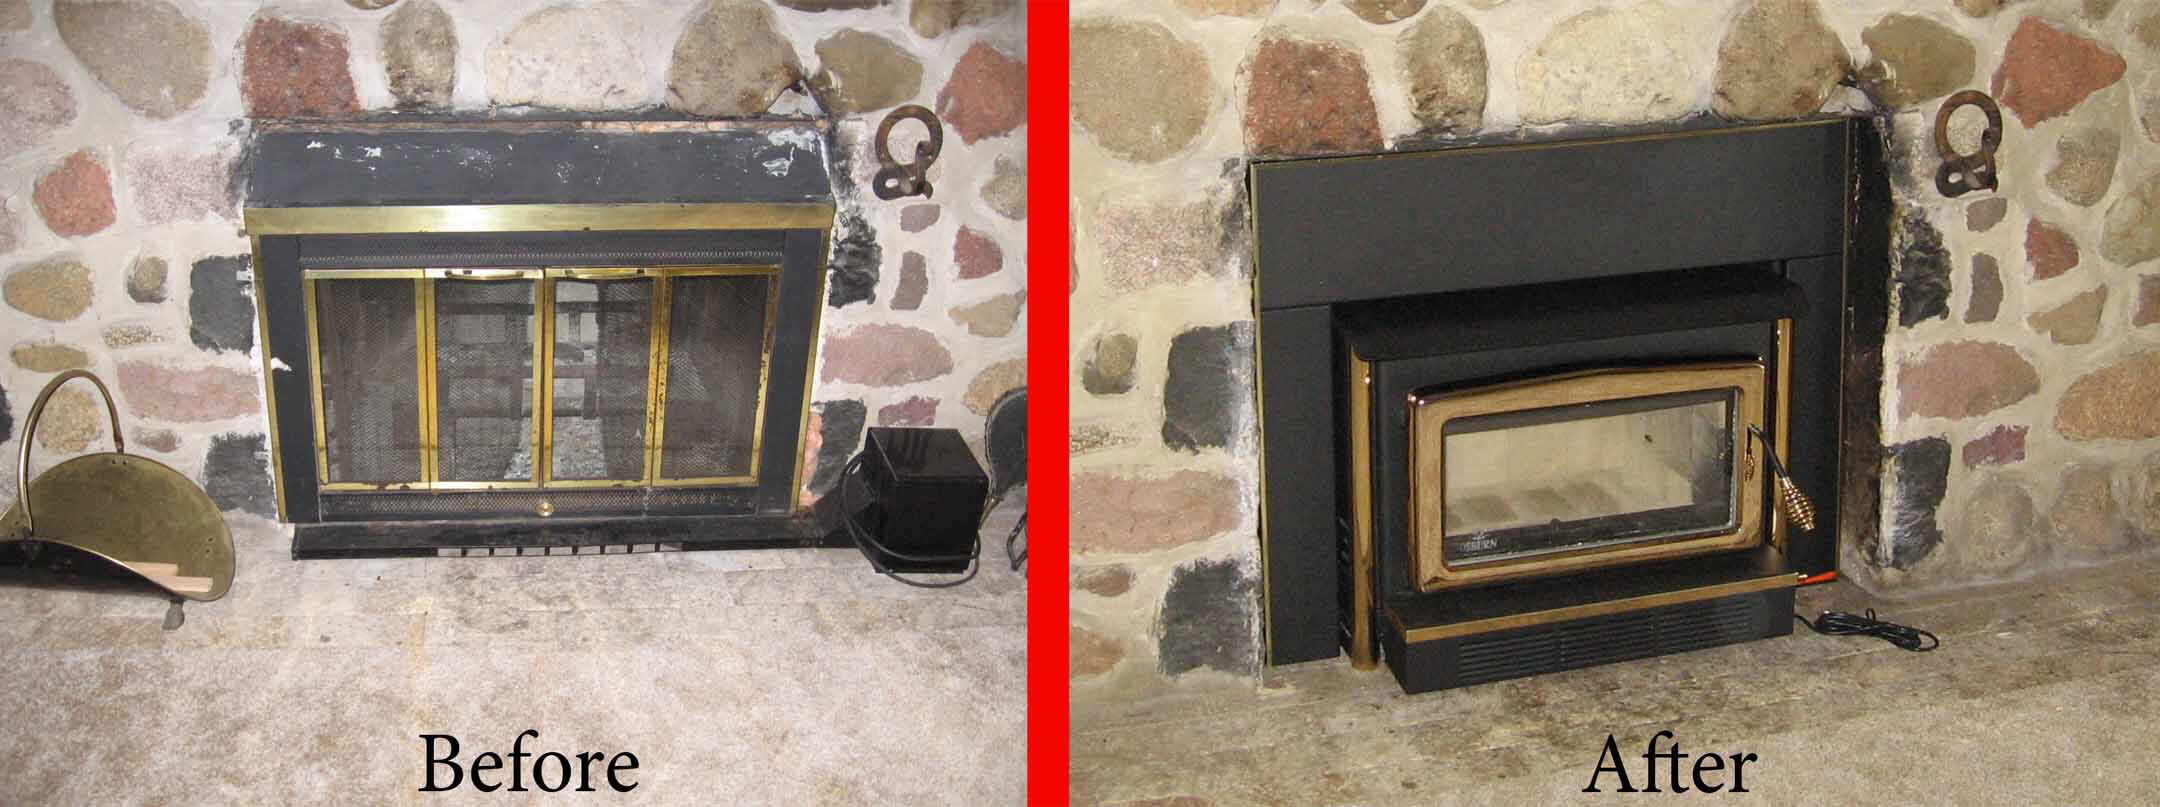 Osburn Fireplace Insert Manual Fireplace Guide By Linda